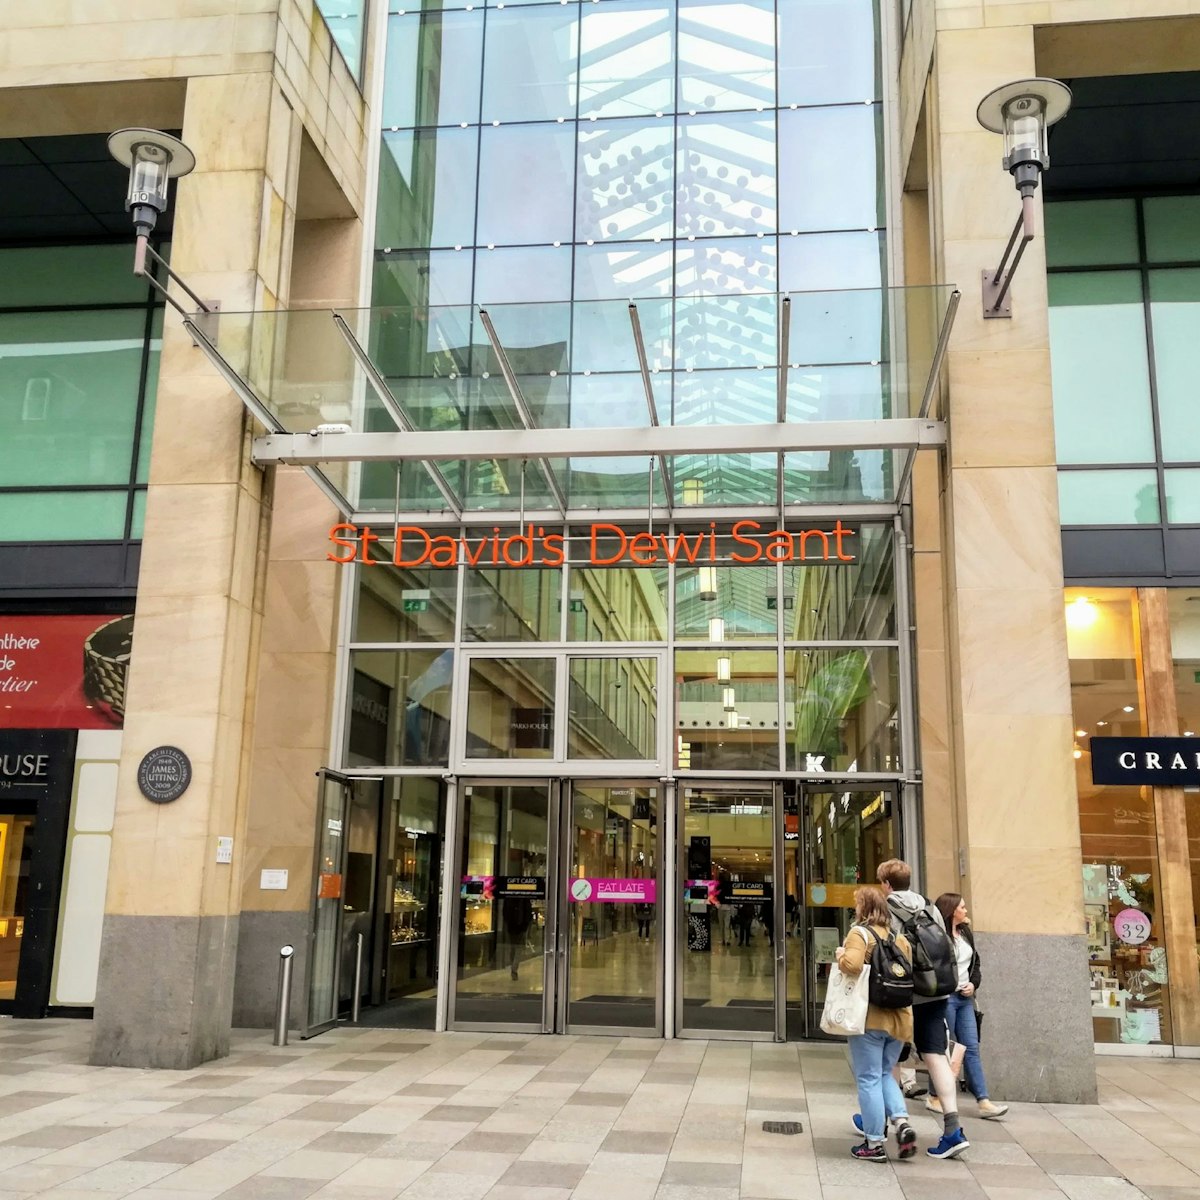 St David's shopping centre.